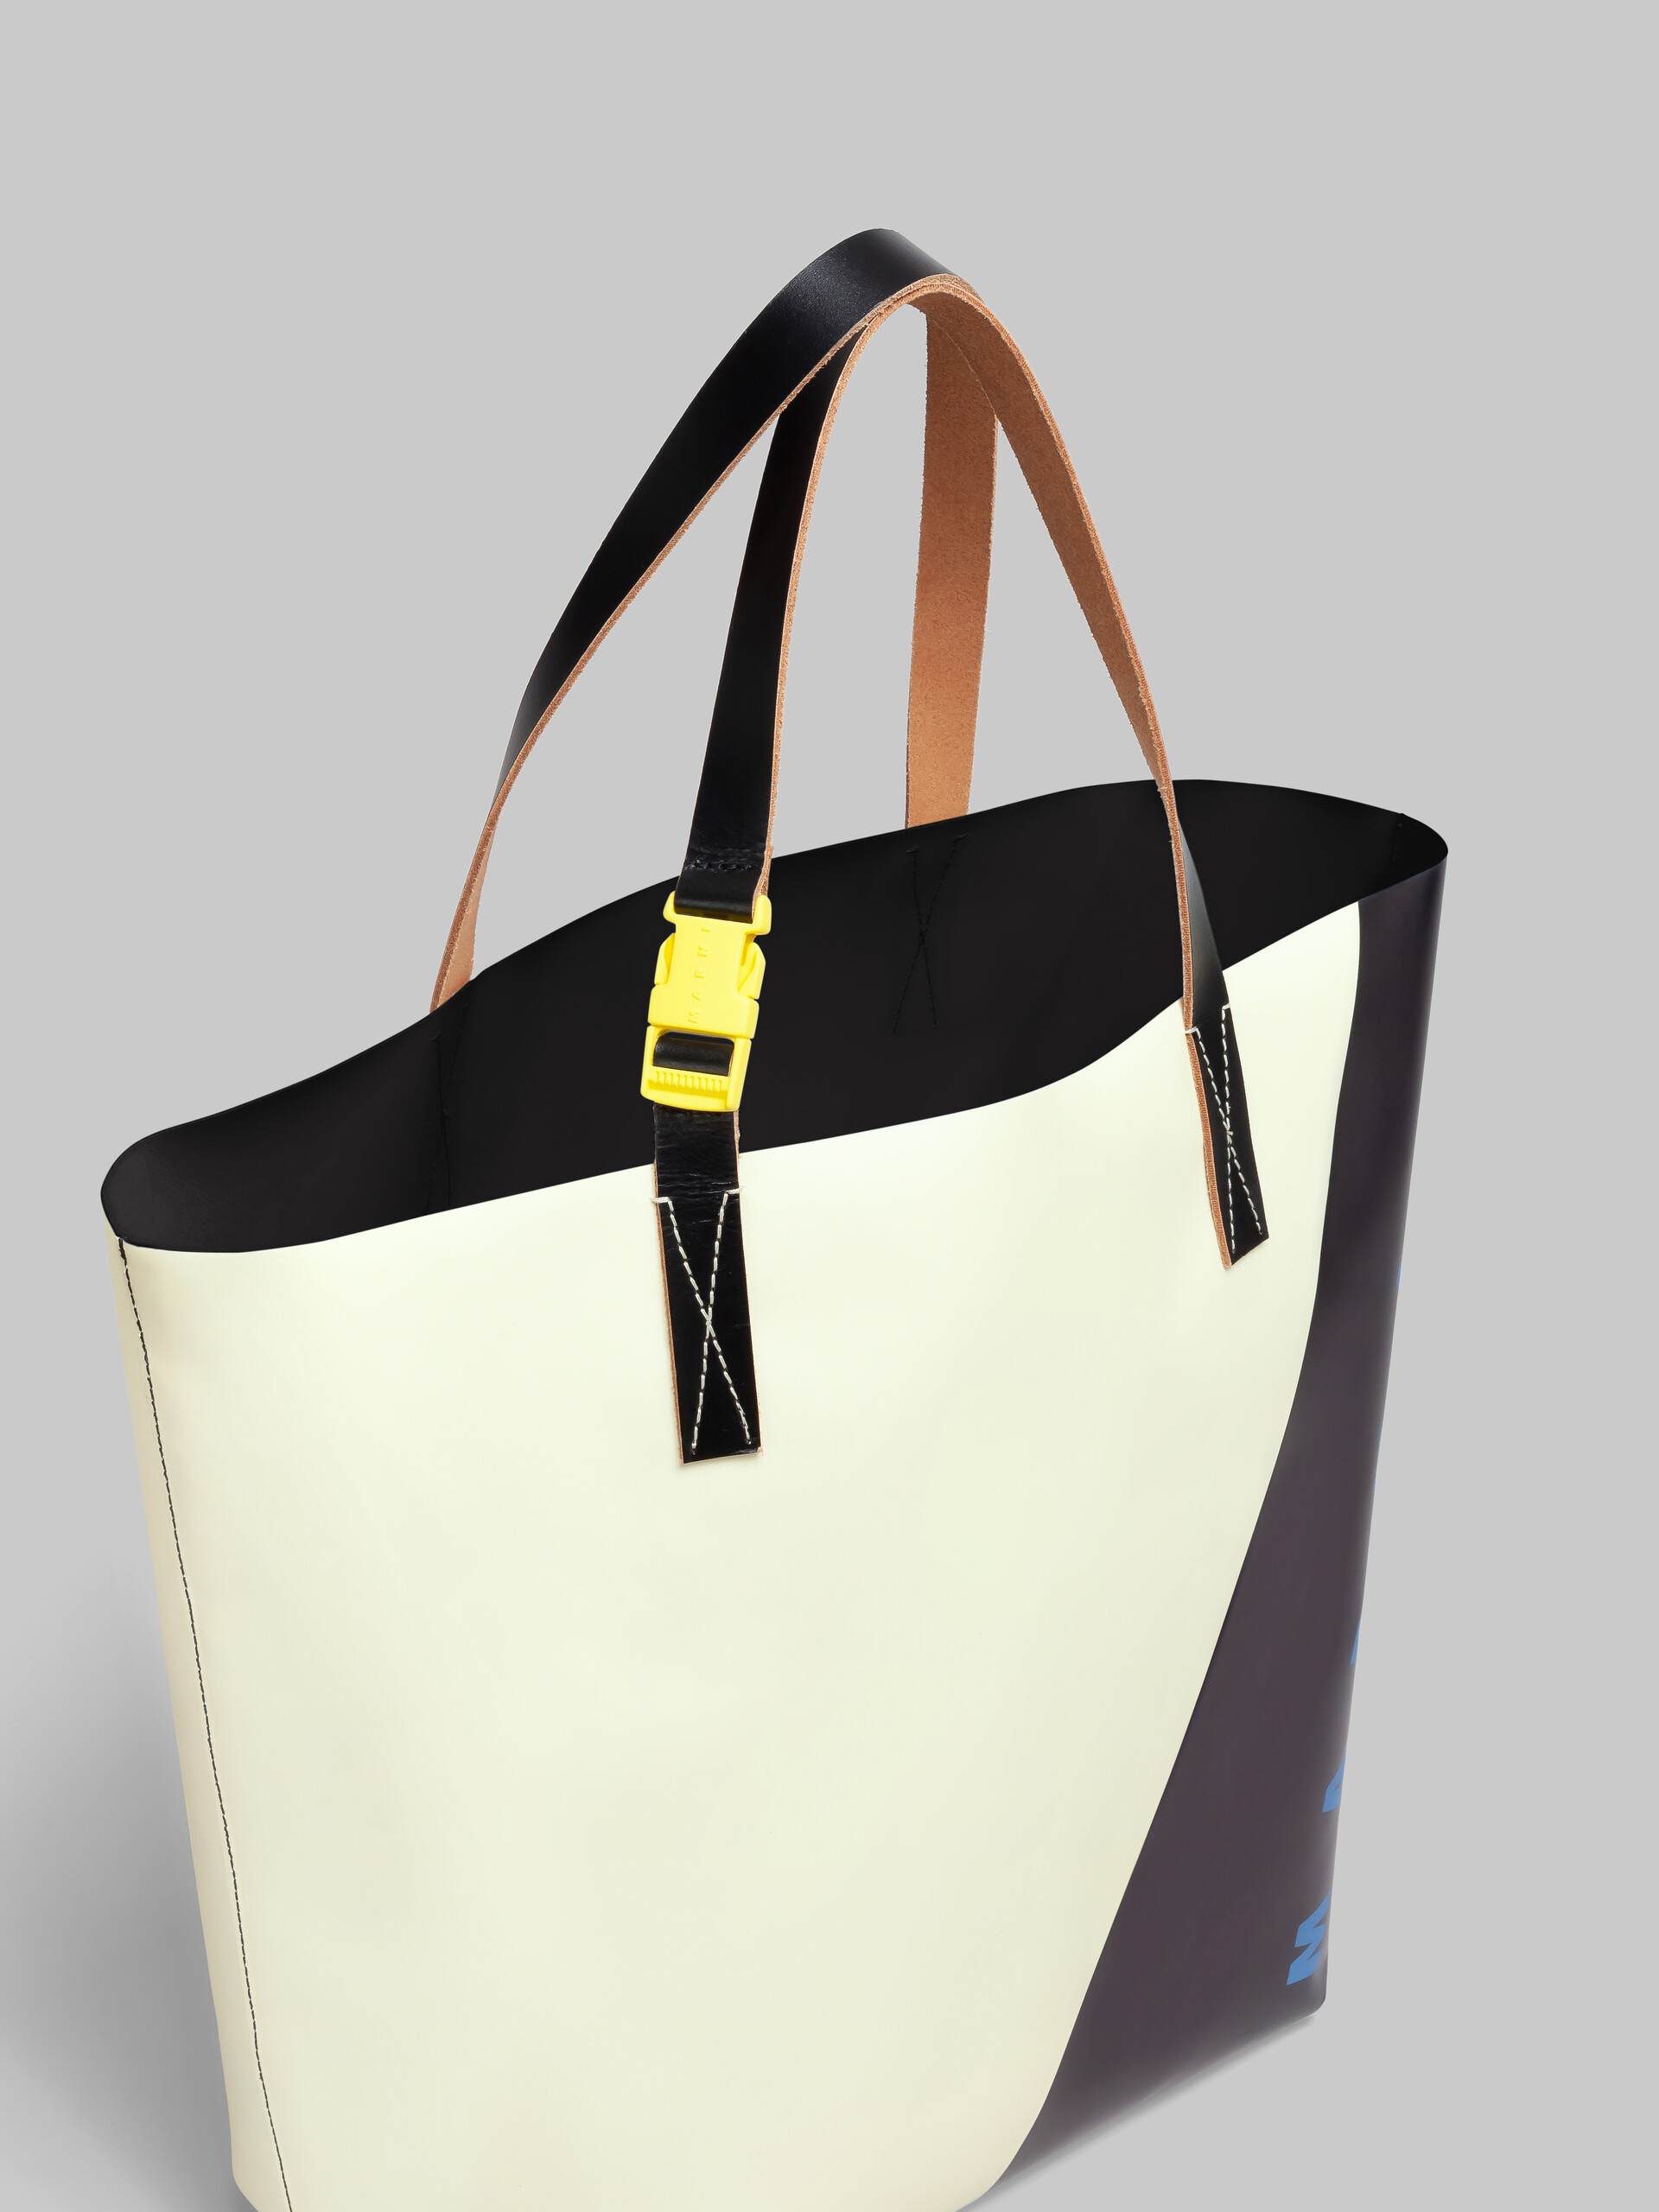 Bolso shopper Tribeca blanco y negro con etiqueta Marni - Bolsos shopper - Image 4